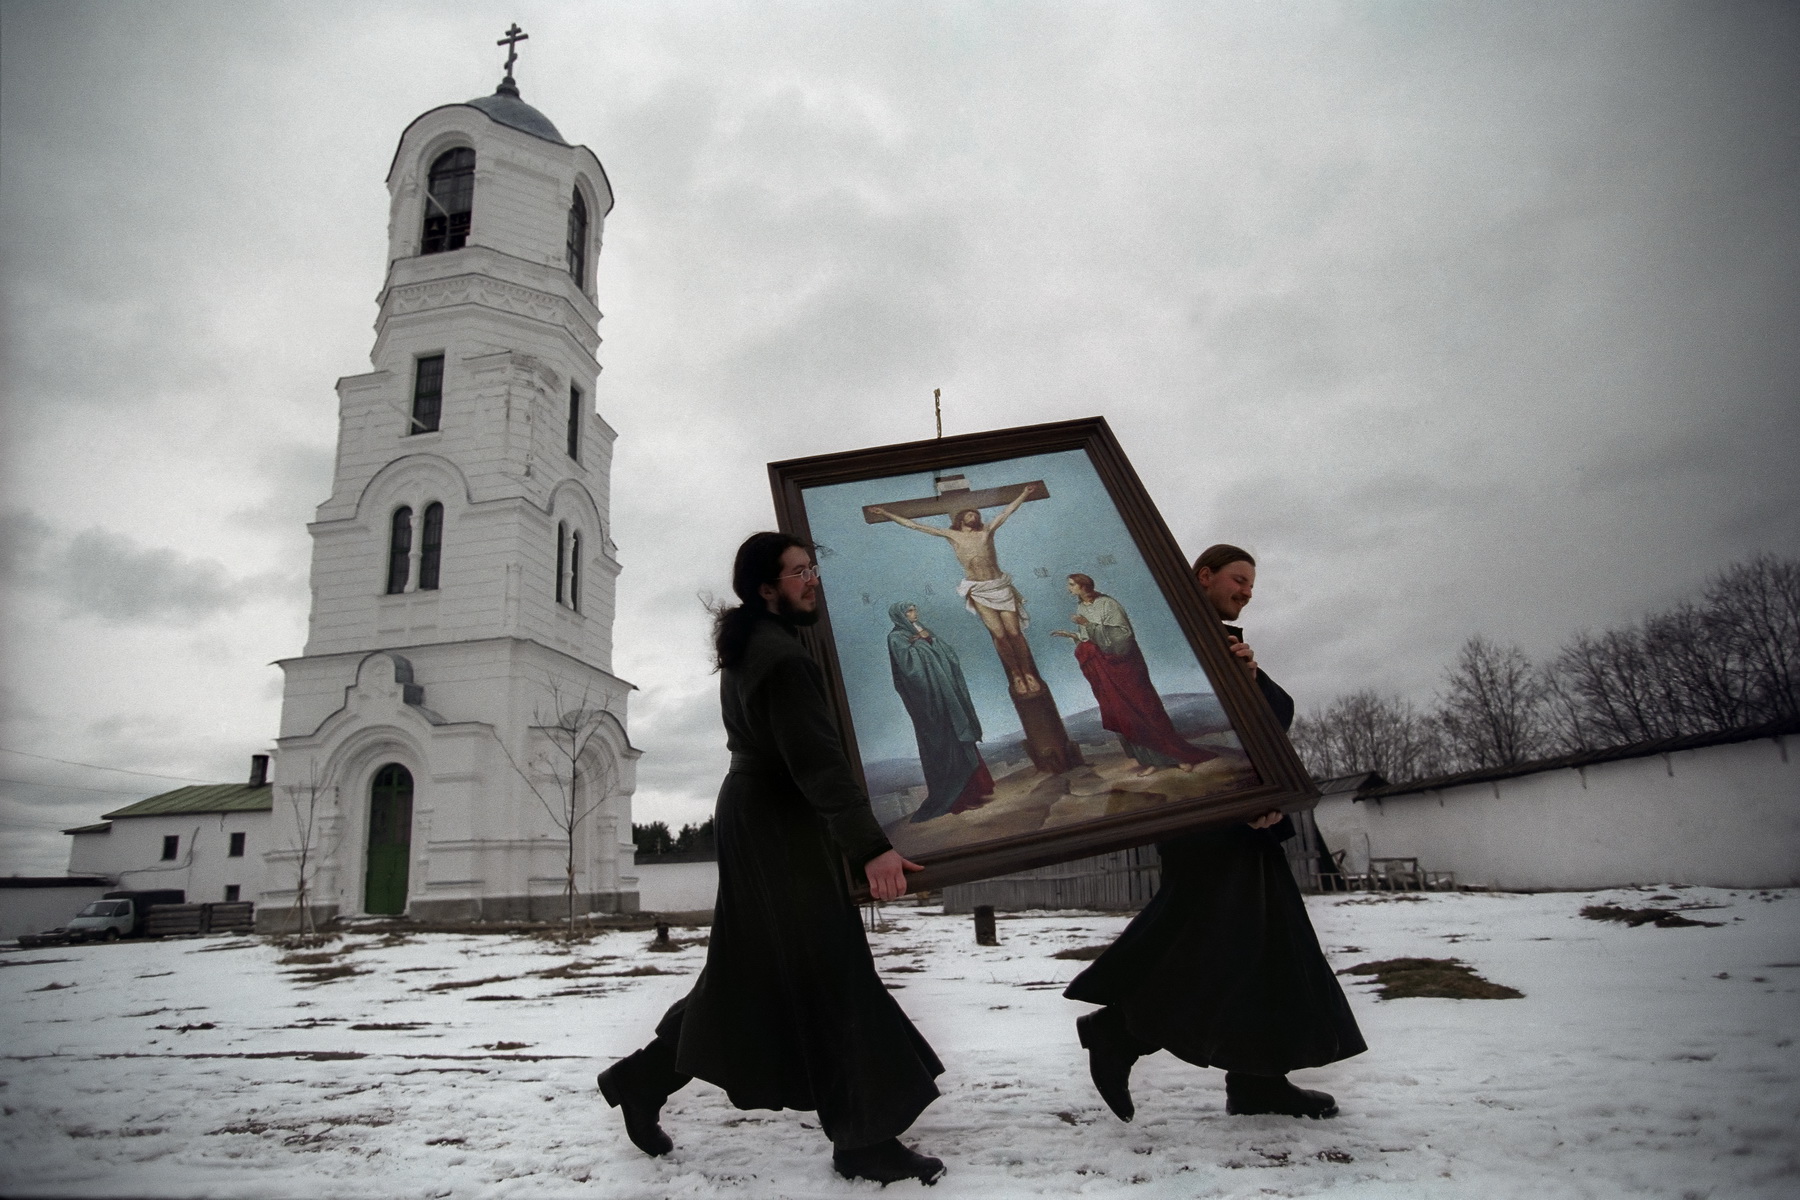 Aleksandro-Svirskyi Monastery, St. Petersburg region, 2002.